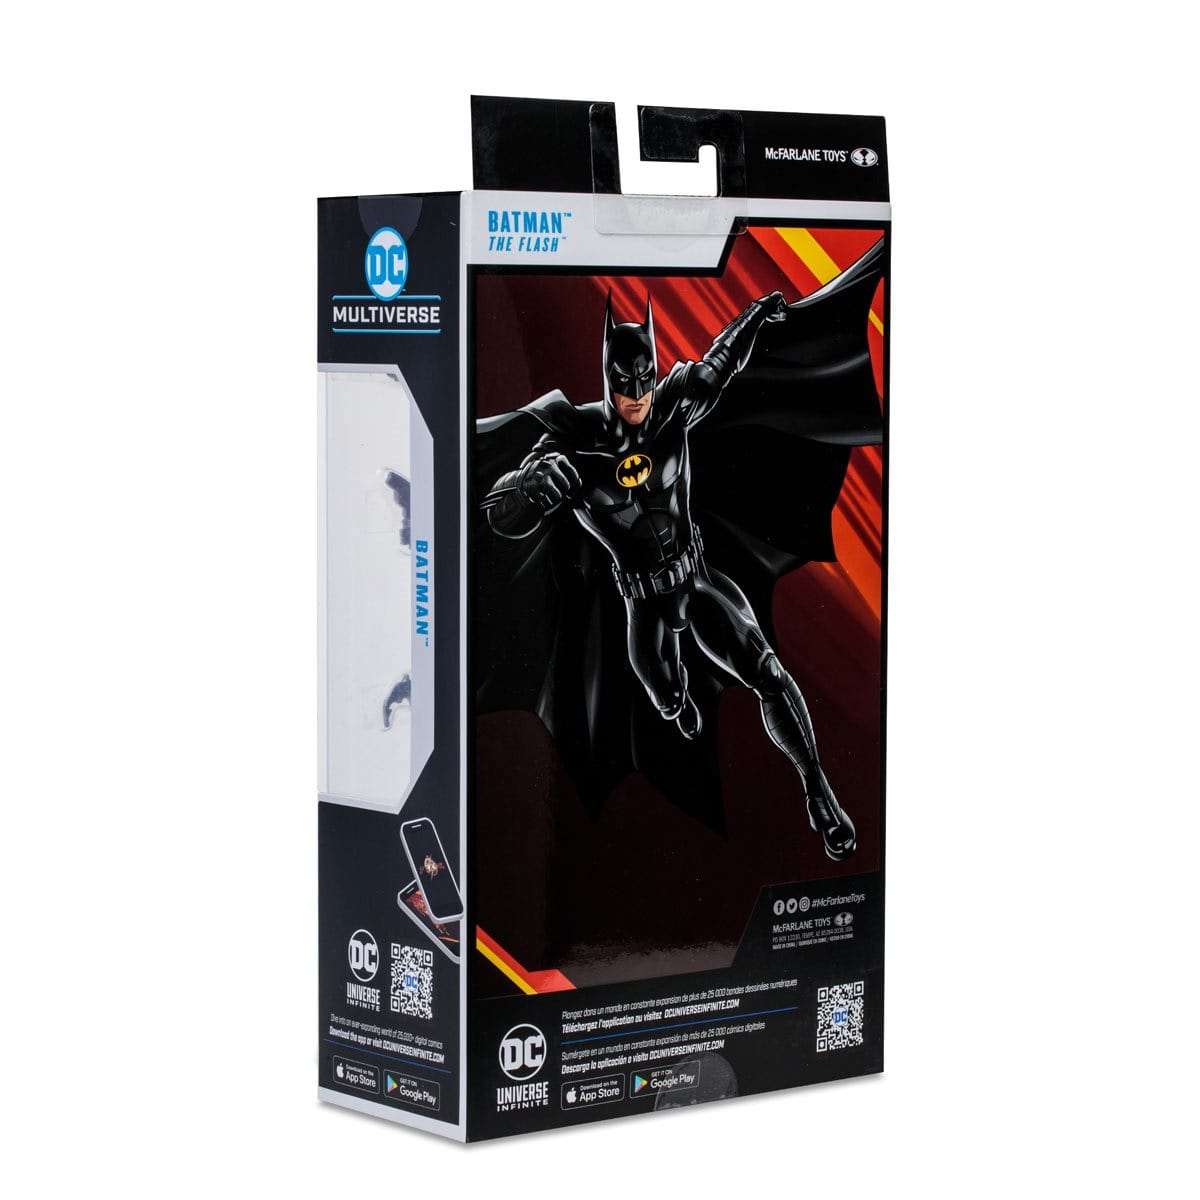 McFarlane Toys DC Multiverse The Flash Batman (Multiverse) Action Figure